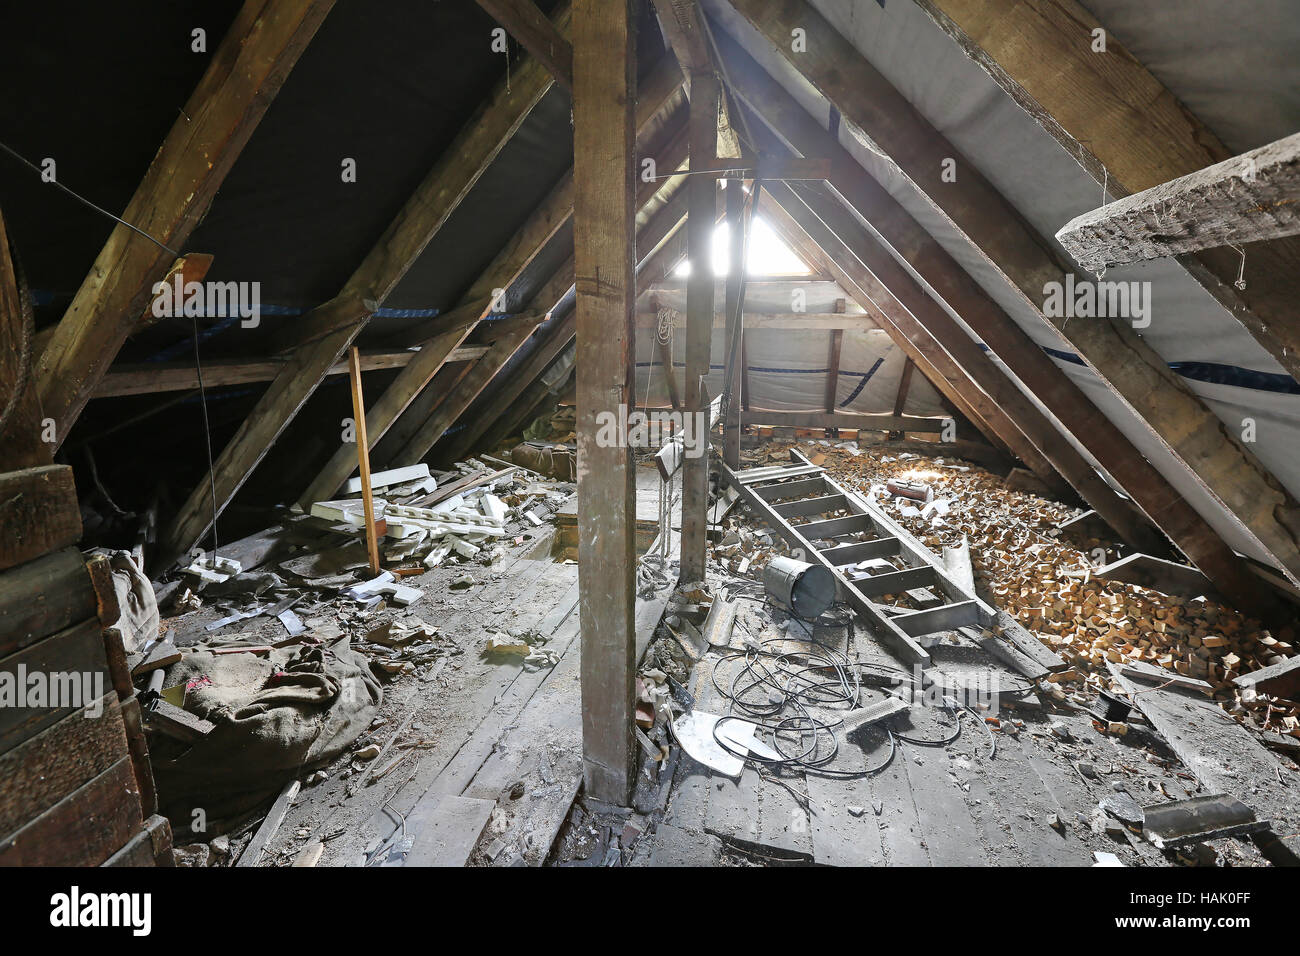 interior of old messy attic Stock Photo